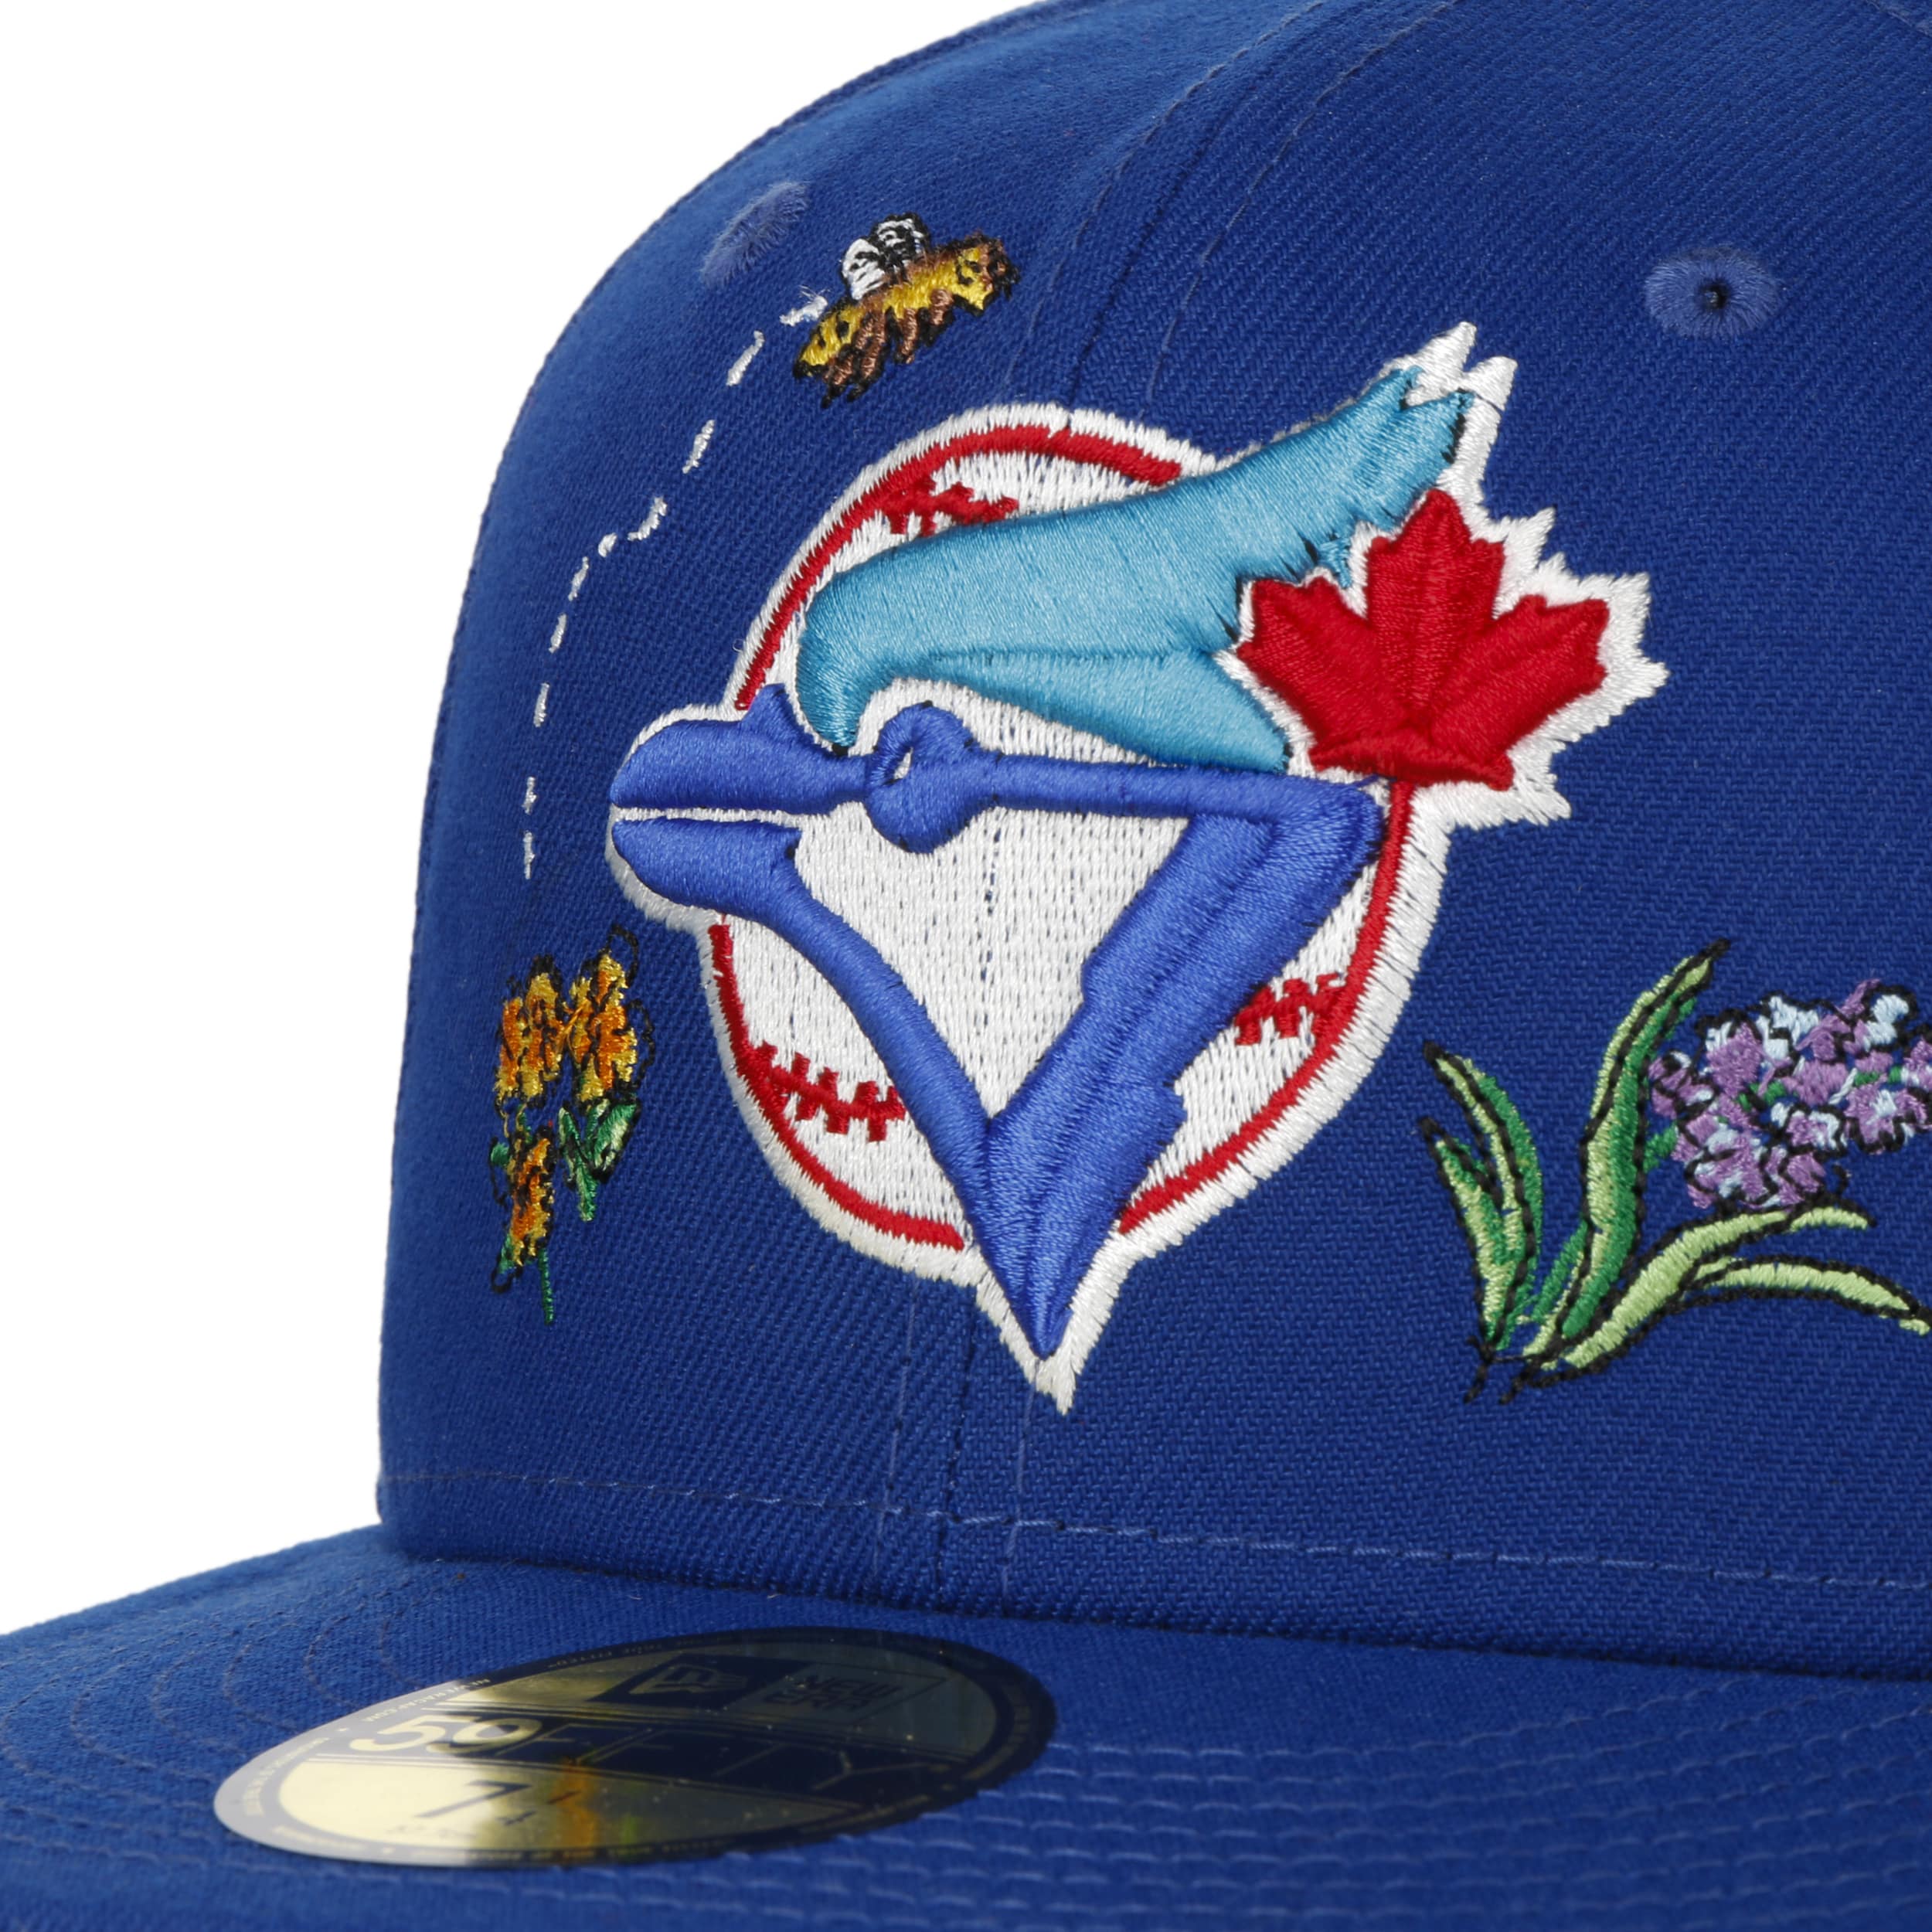 59Fifty MLB Toronto Blue Jays Cap by New Era - 48,95 €